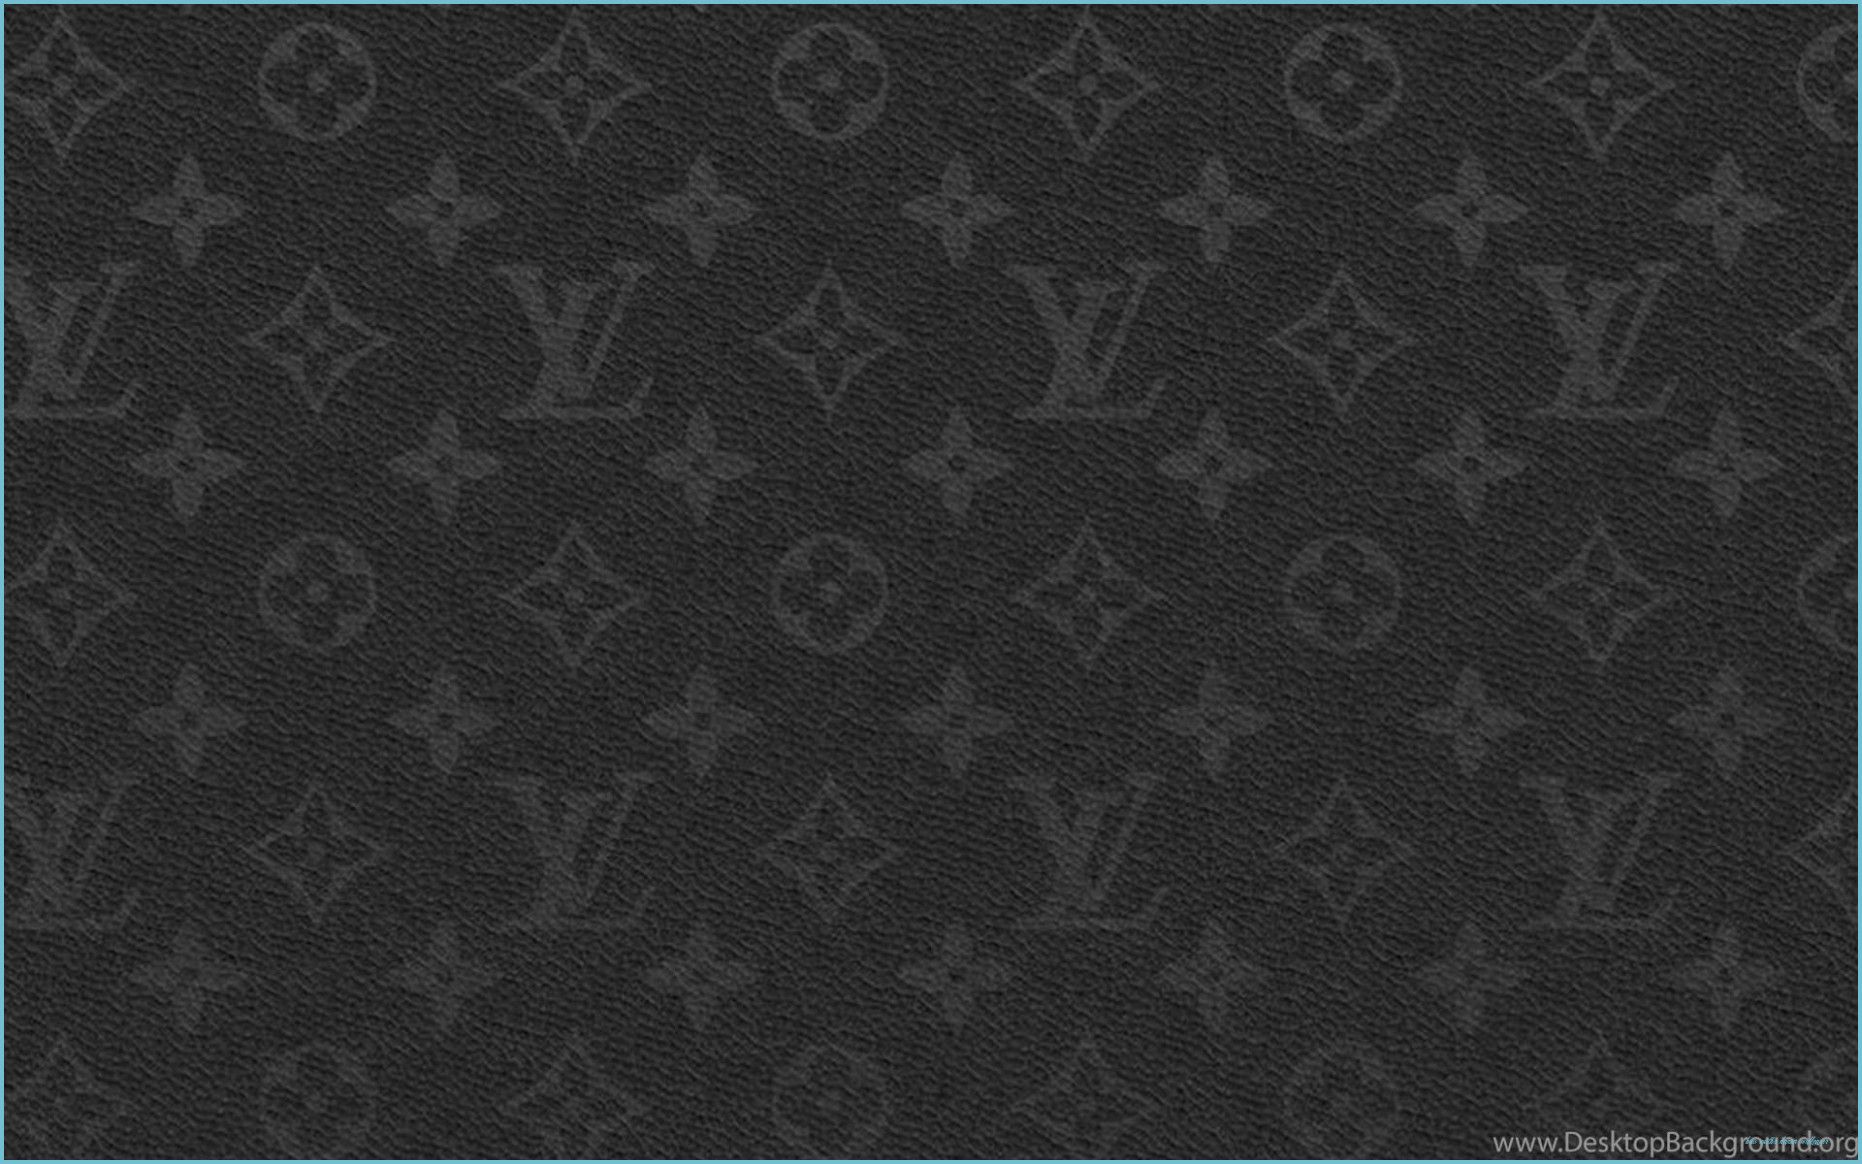 Download wallpapers Louis Vuitton stone logo, black stone background, Louis  Vuitton, creative, grunge, Louis Vuitton logo, brands for desktop free.  Pictures for desktop free